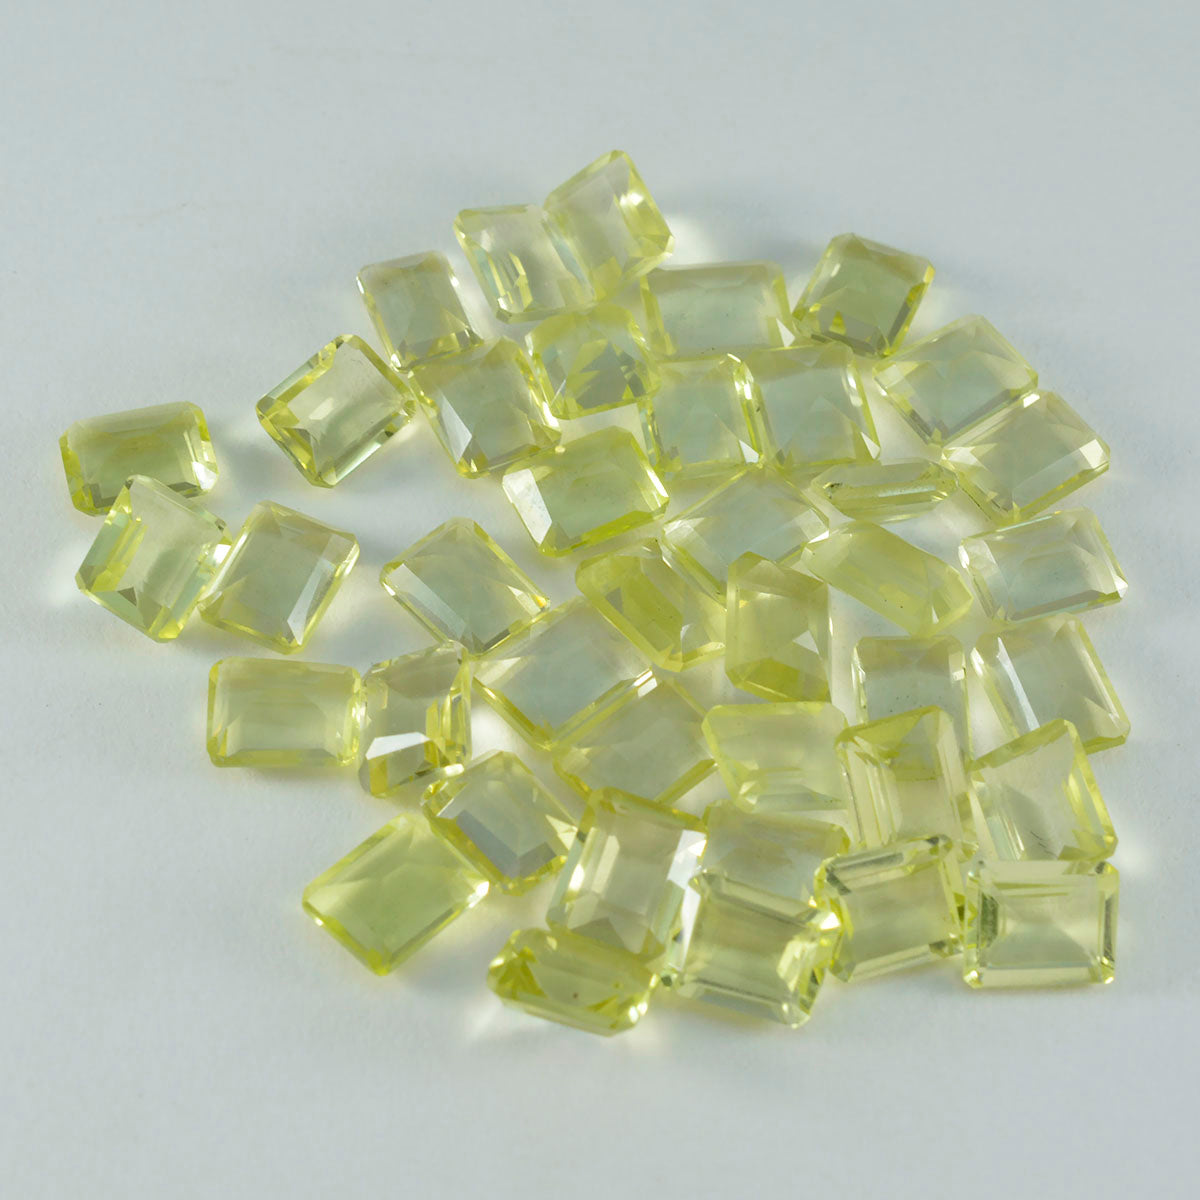 Riyogems 1PC Yellow Lemon Quartz Faceted 4x6 mm Octagon Shape A+ Quality Loose Gems